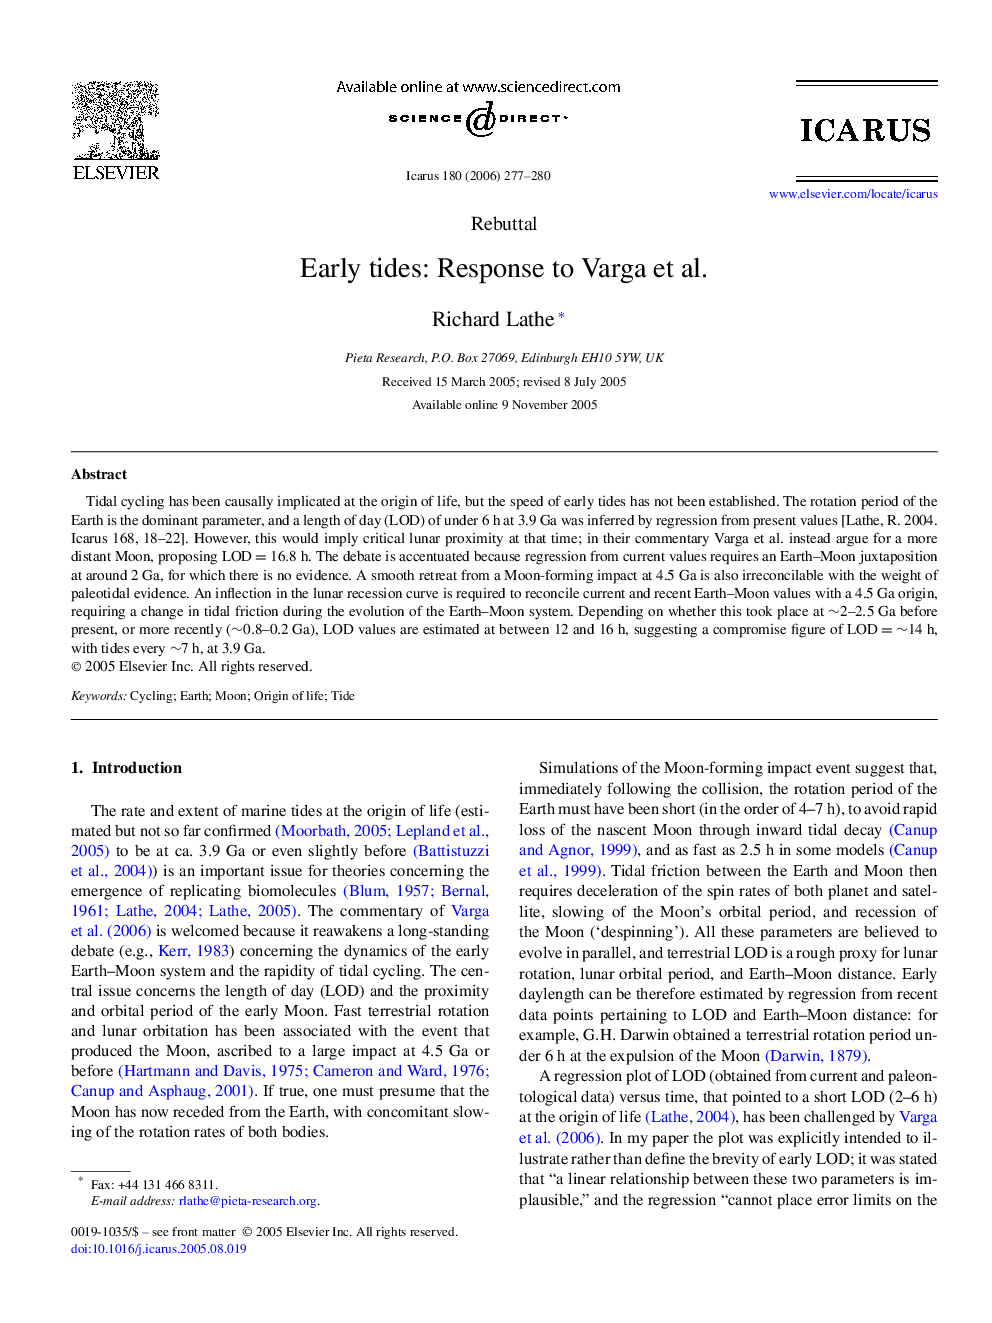 Early tides: Response to Varga et al.